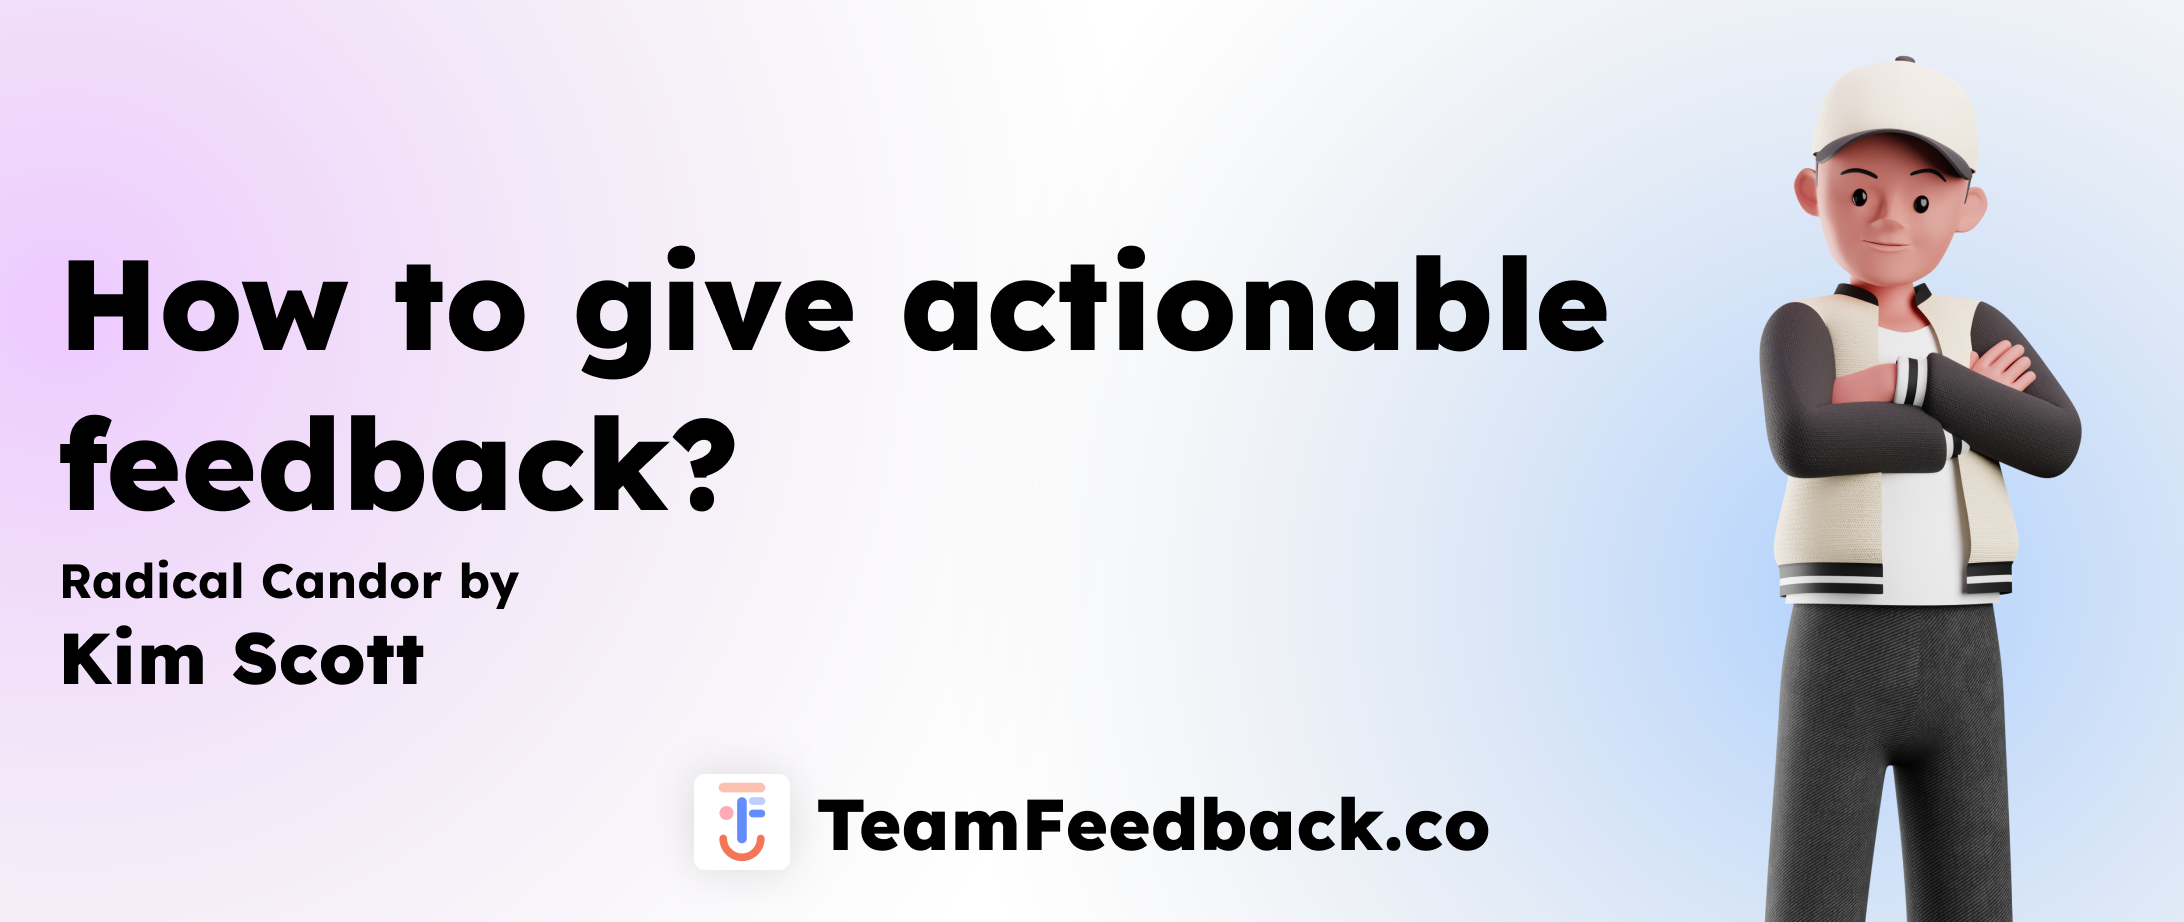 How to give actionable feedback? image